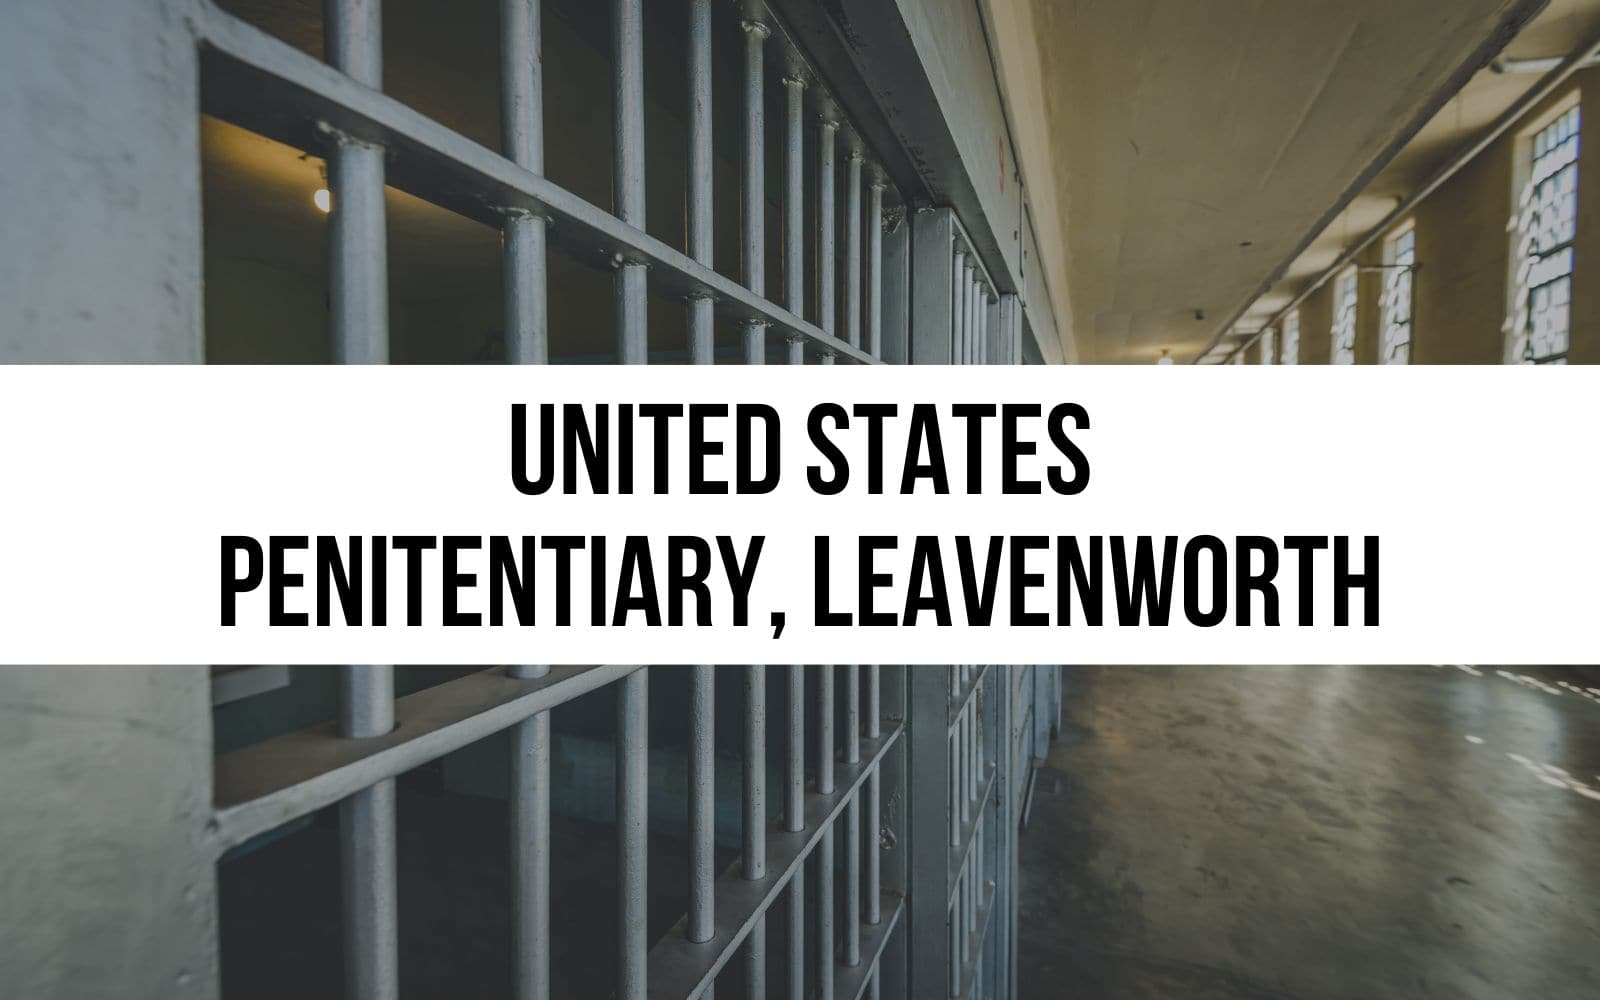 United States Penitentiary, Leavenworth